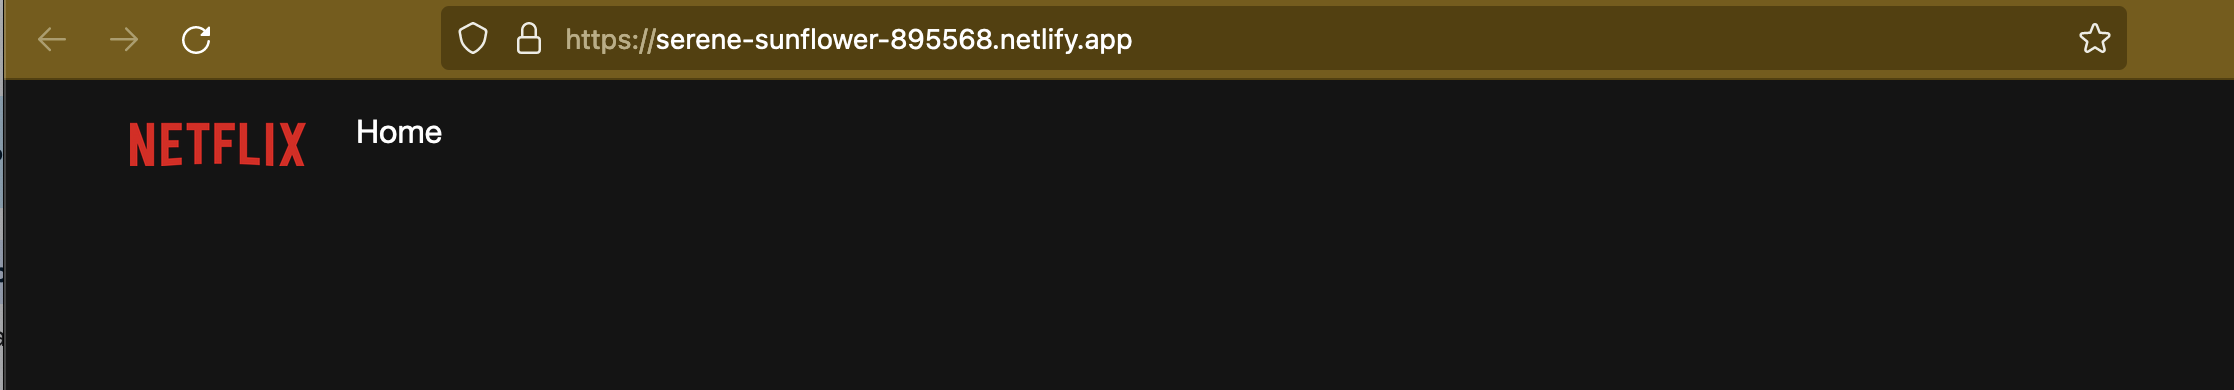 Netlify site, no data yet (skeletal GUI)